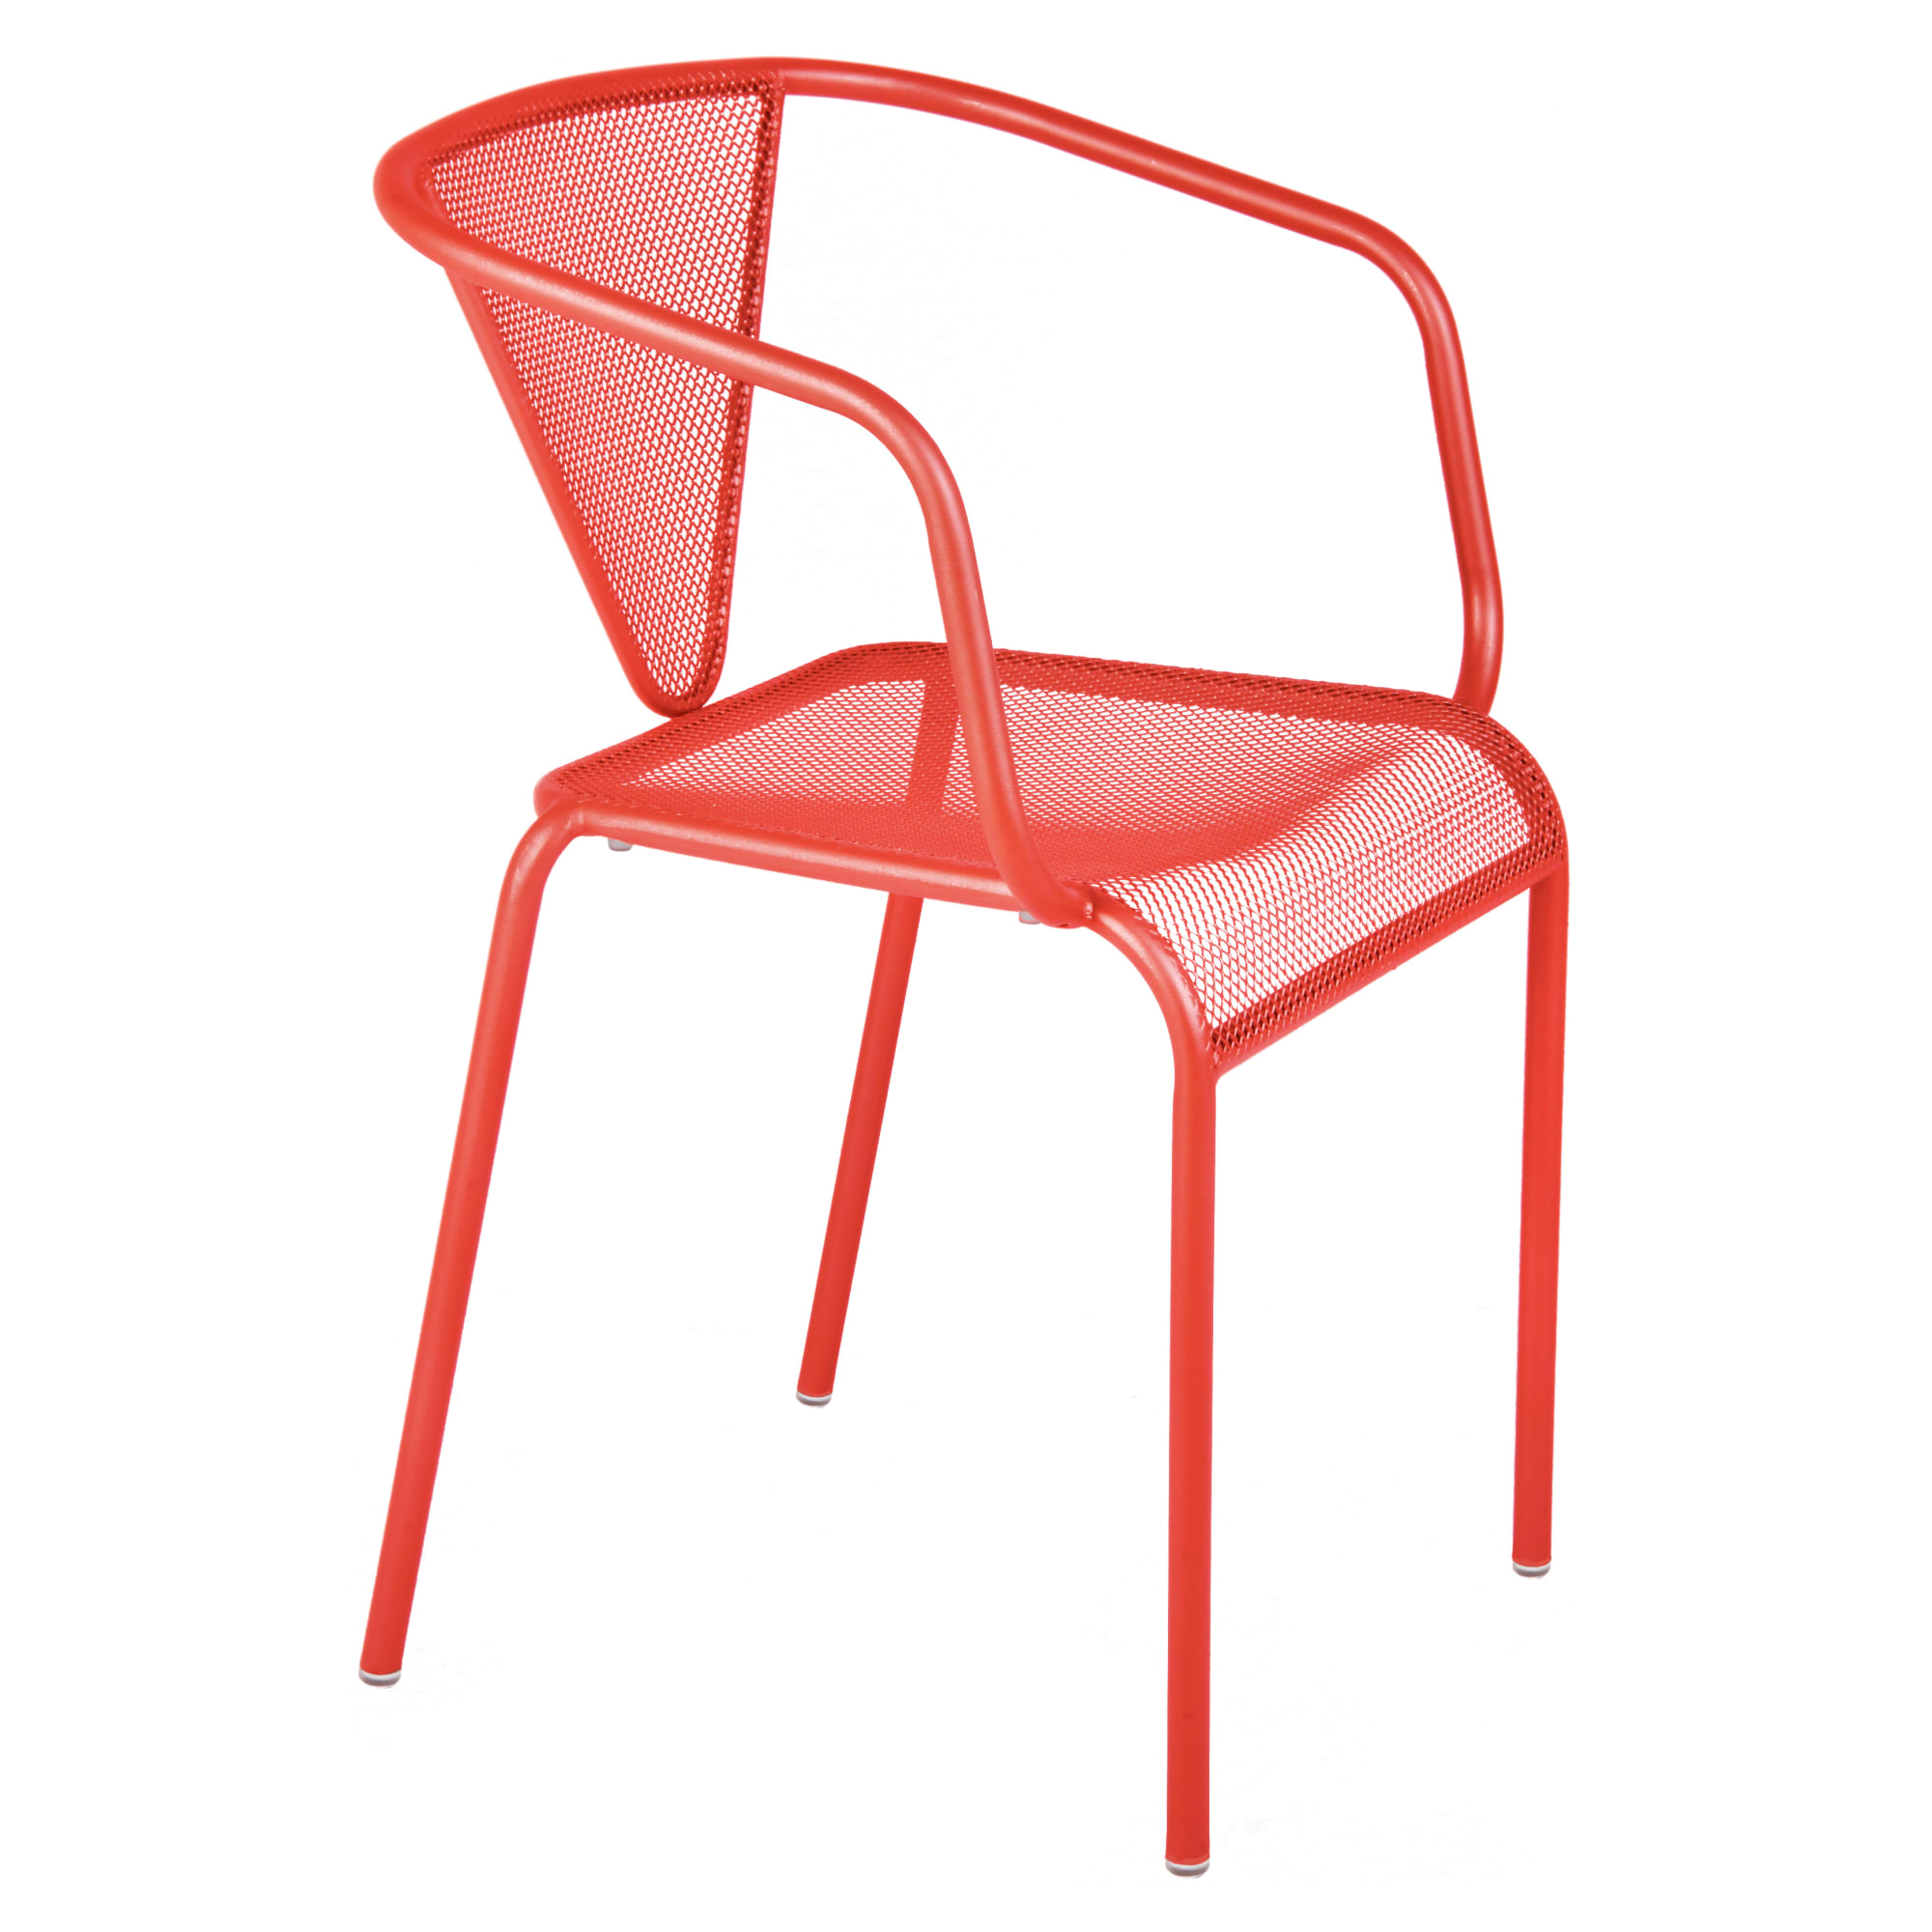 Clarius Metal Mesh Patio Arm Chair, Metal Mesh Lawn Chairs